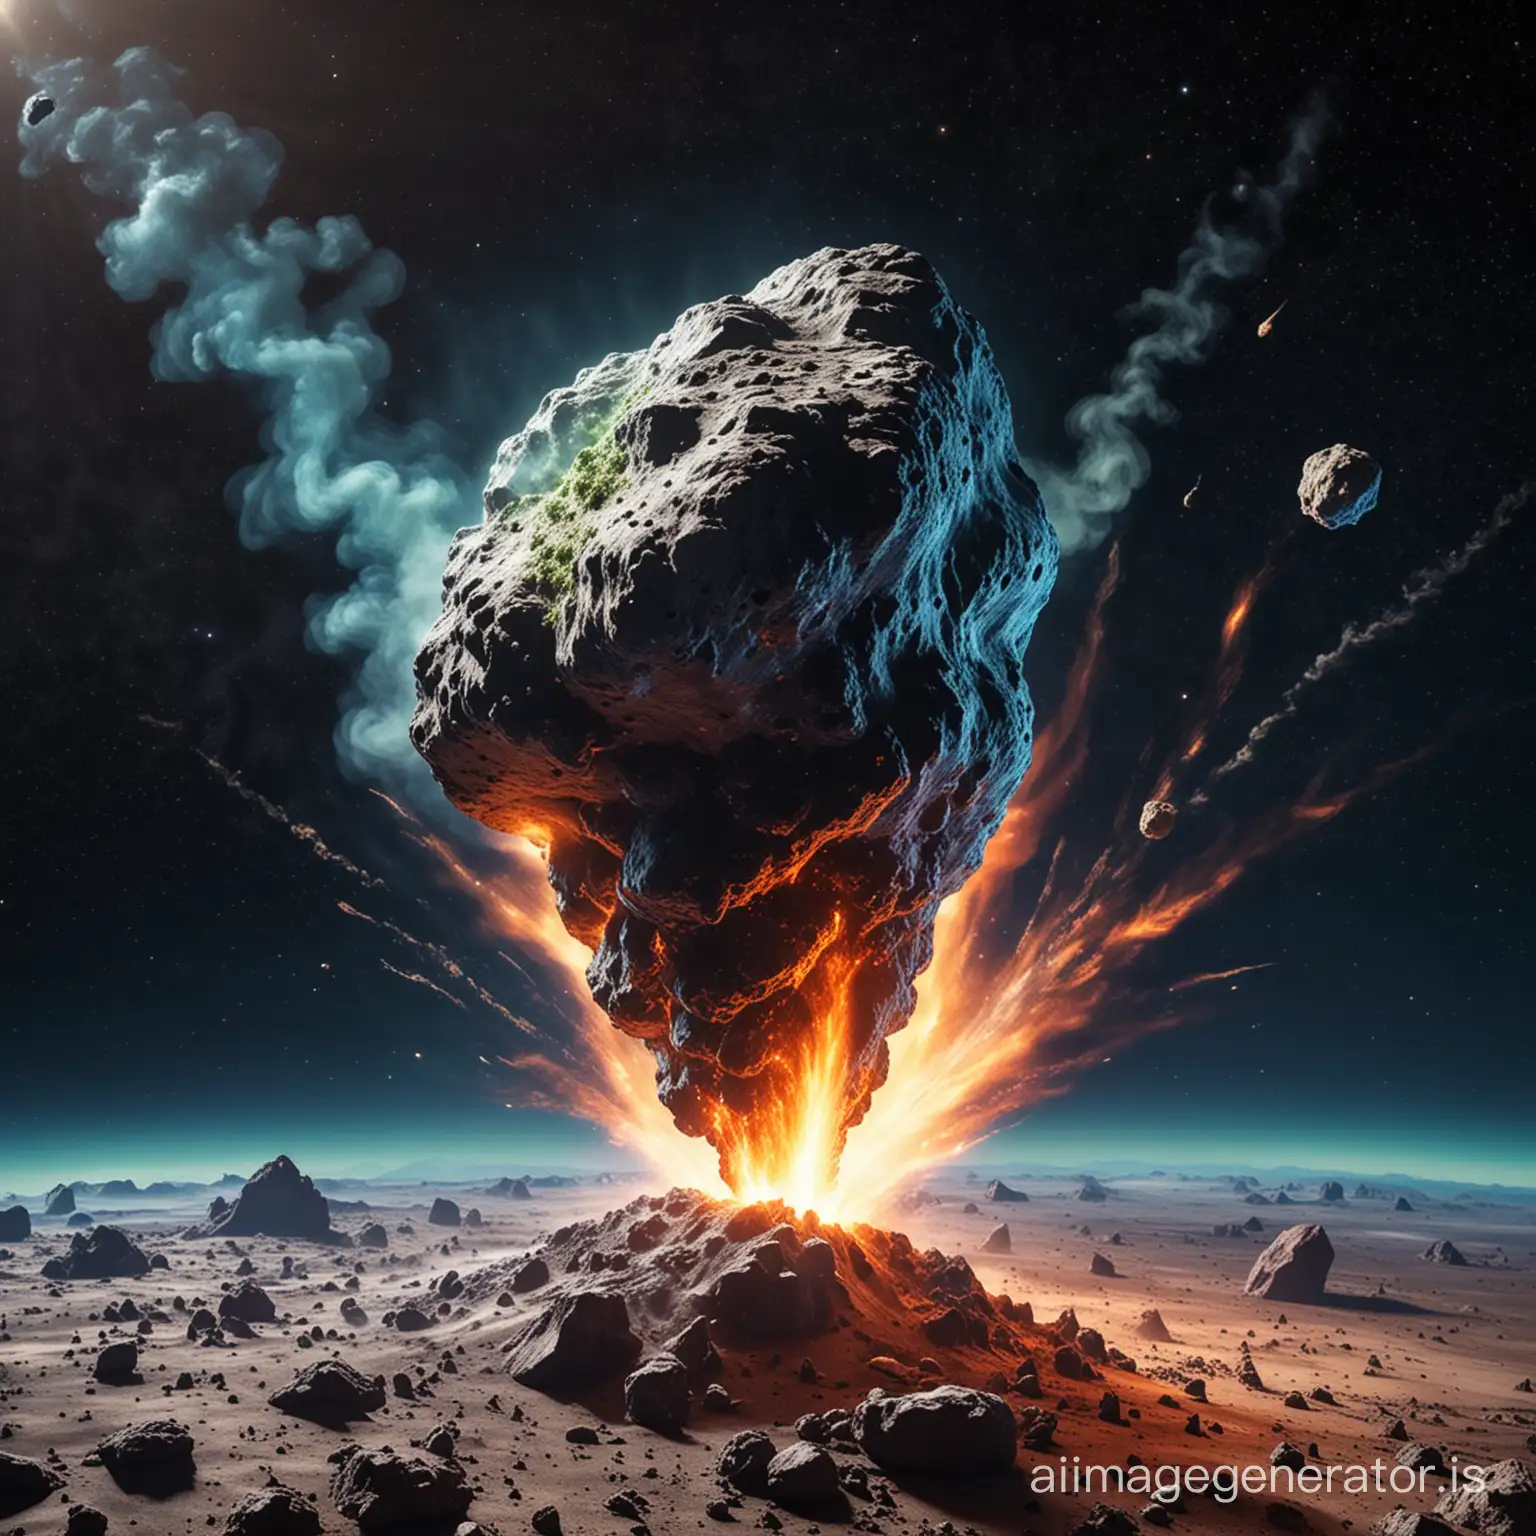 Colorful-Marijuana-Asteroid-Descends-to-Earth-in-Fiery-Blaze